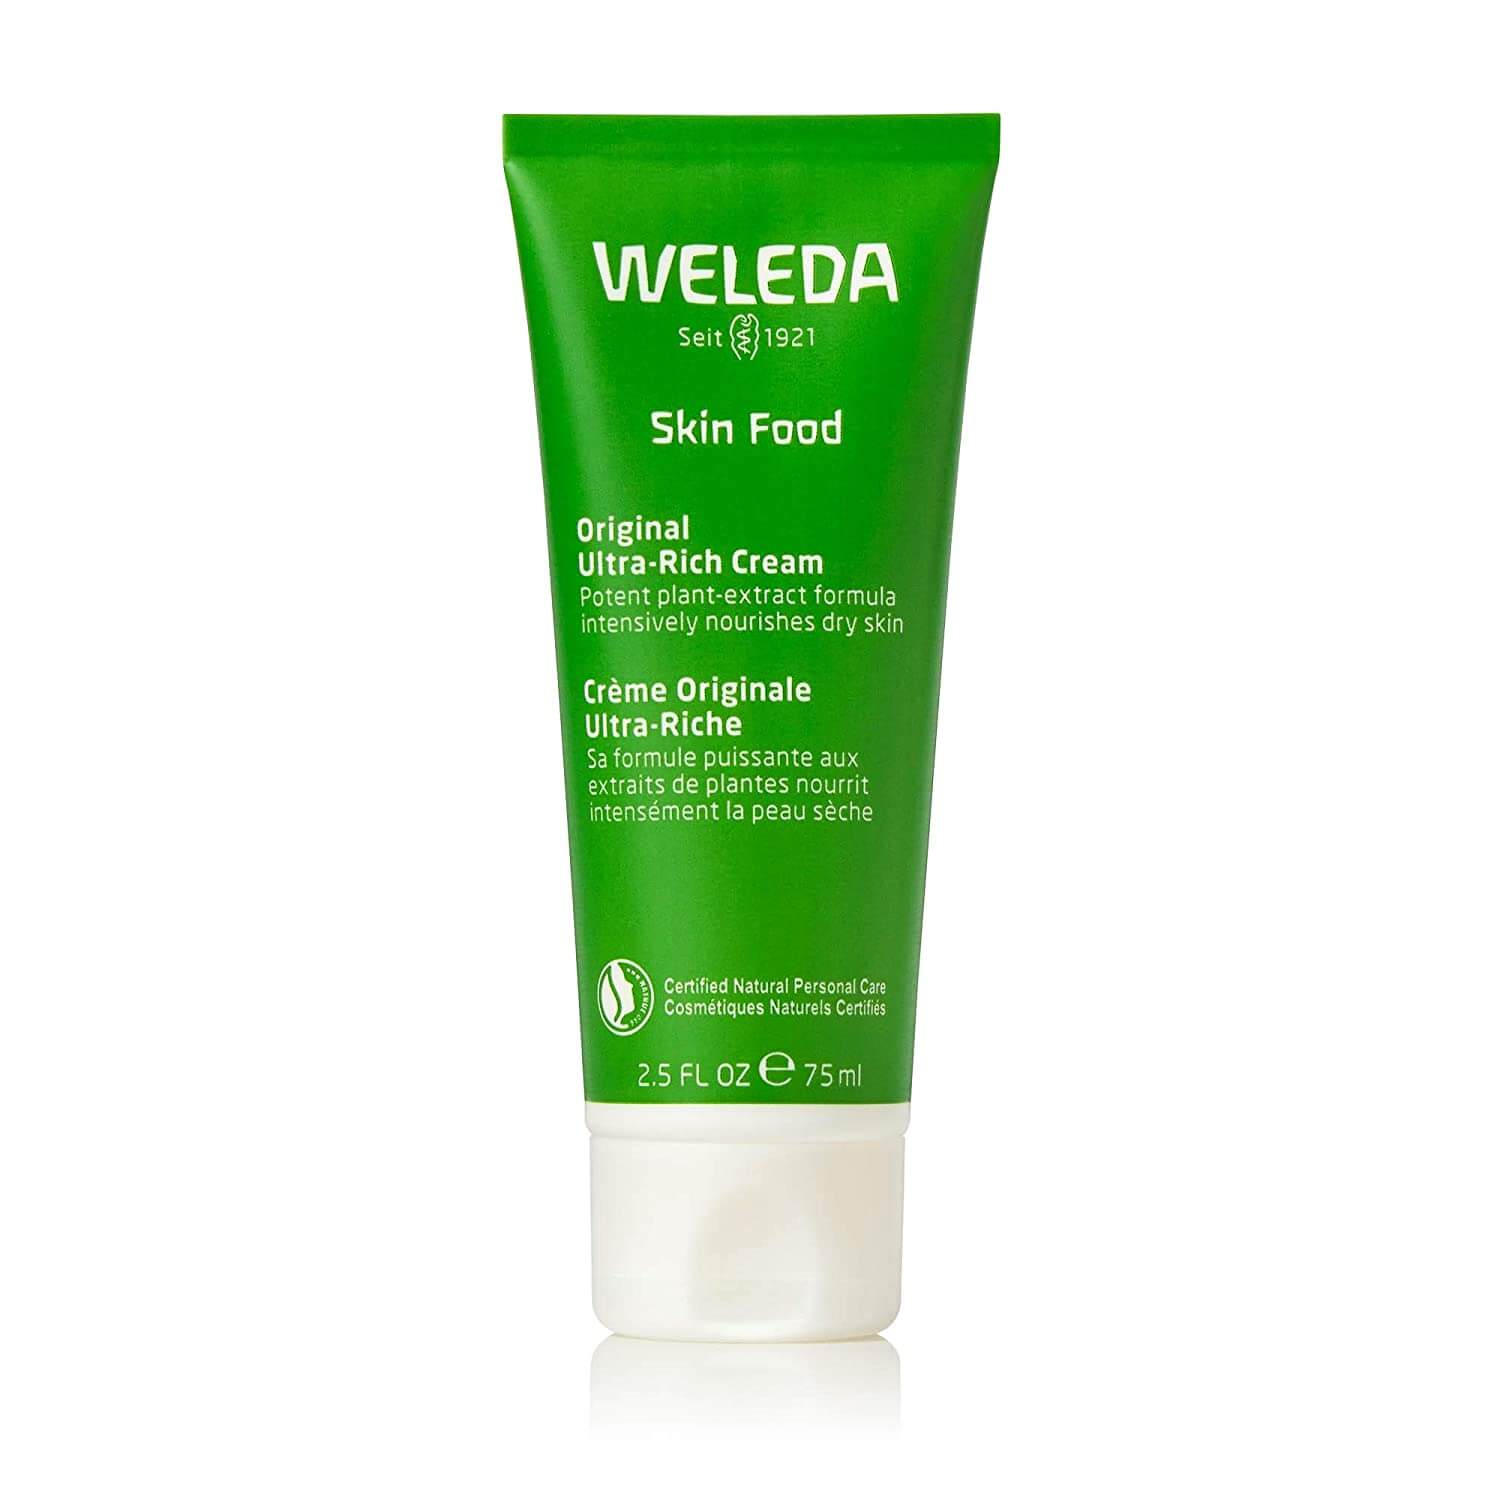 weleda skin food original ultra-rich cream reviews